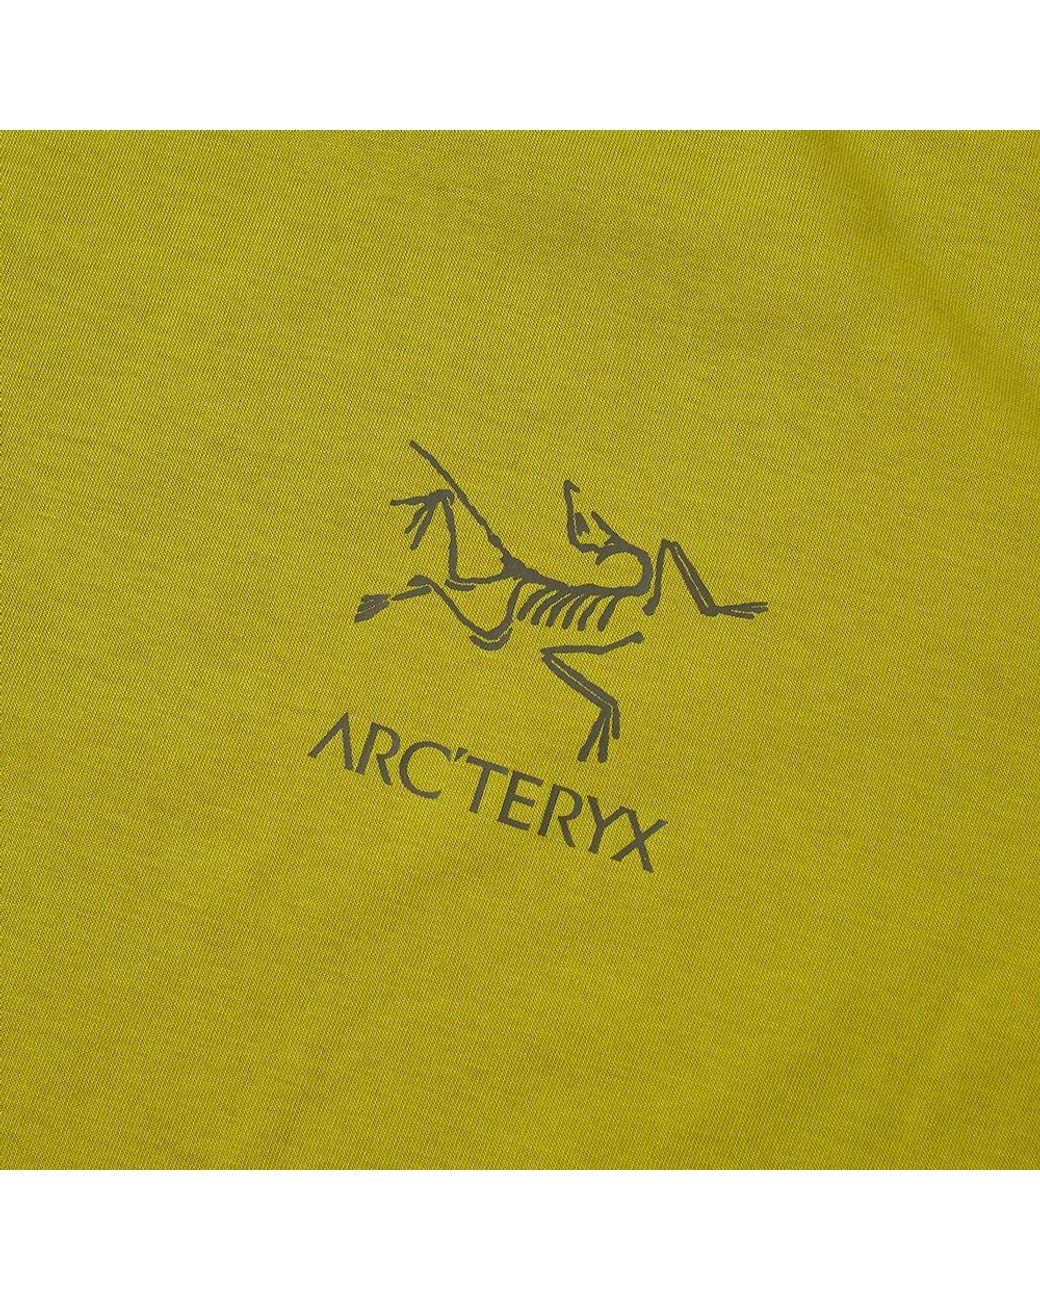 Arc'teryx Arc'teryx System A Copal Bird Tee for Men | Lyst